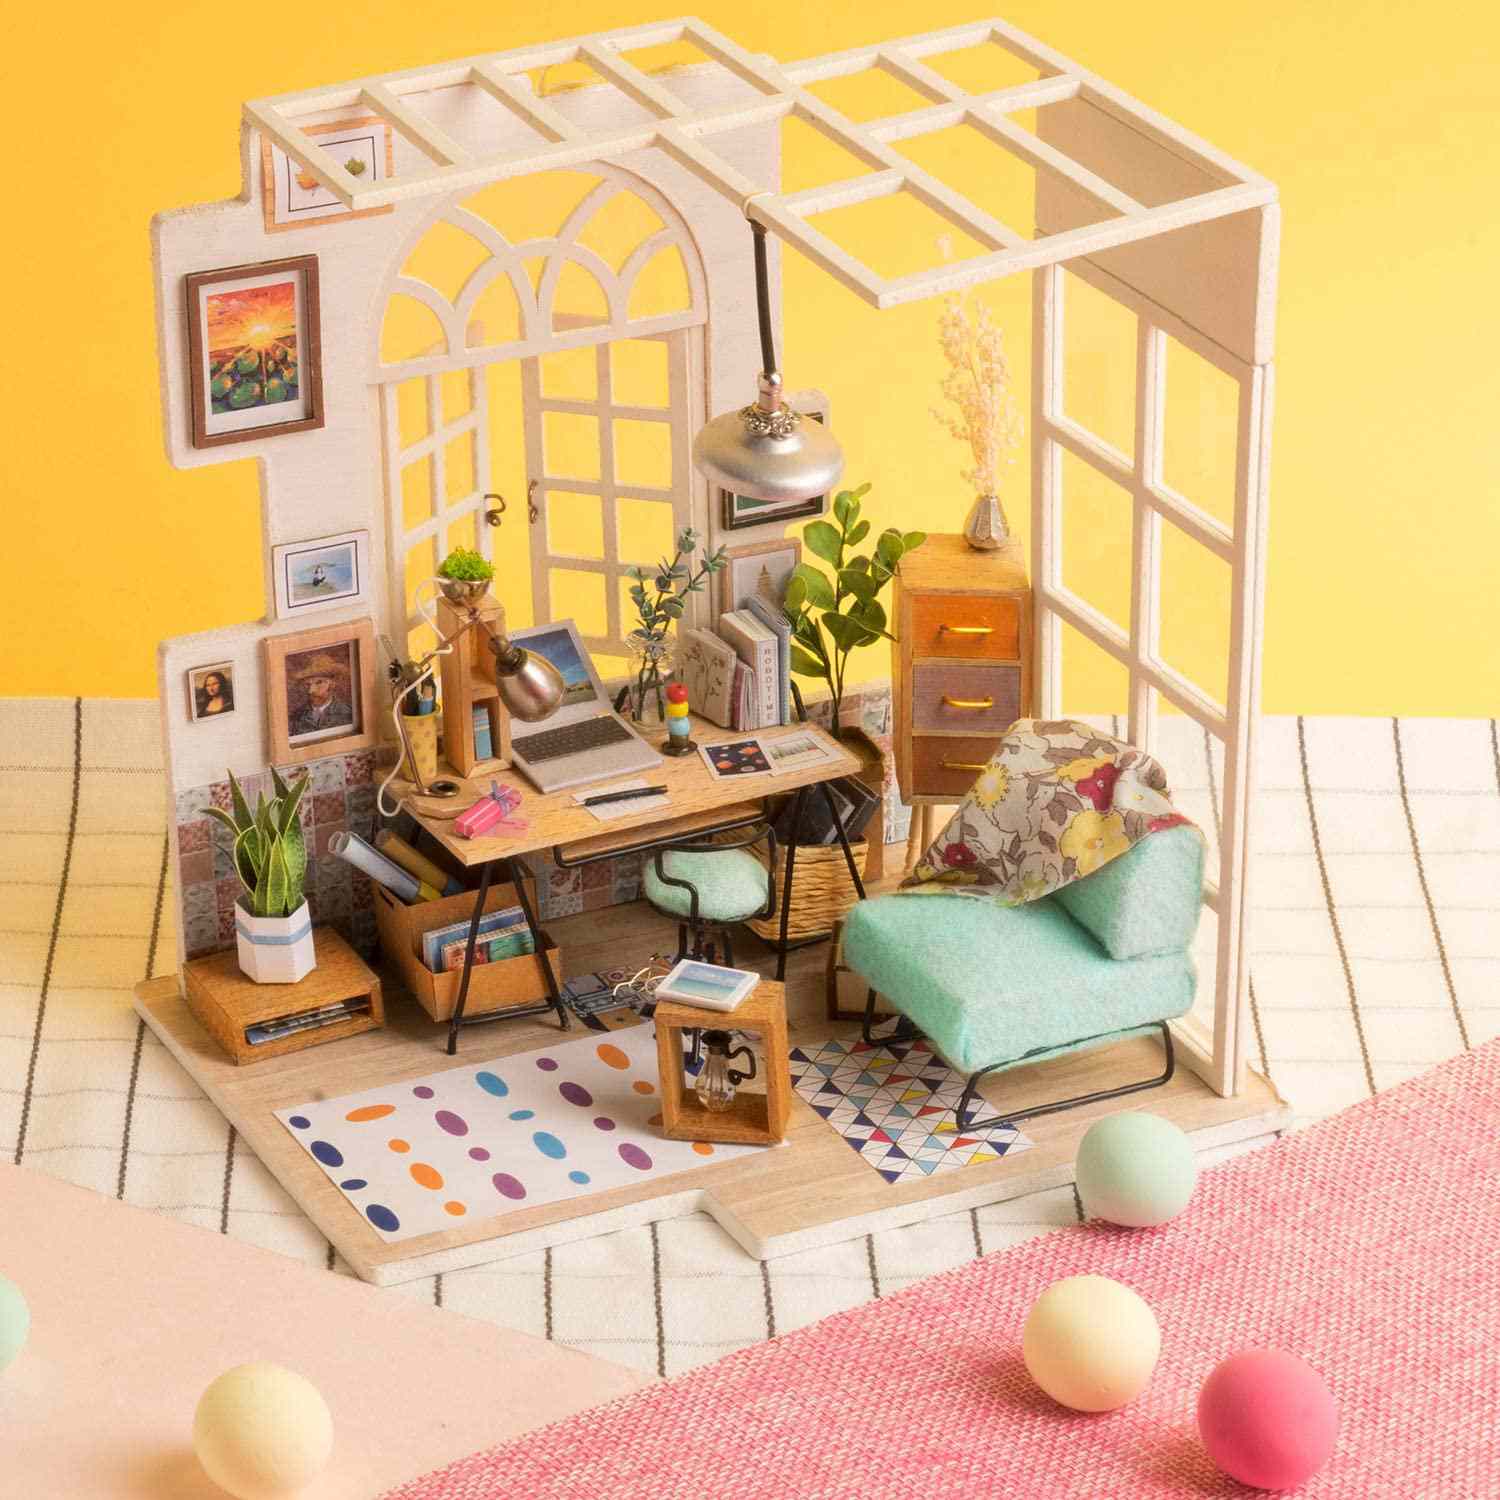 Dollhouse Miniature vintage coffee wood sign 1:12 scale dollhouse accessories decor artwork kitchen accessories